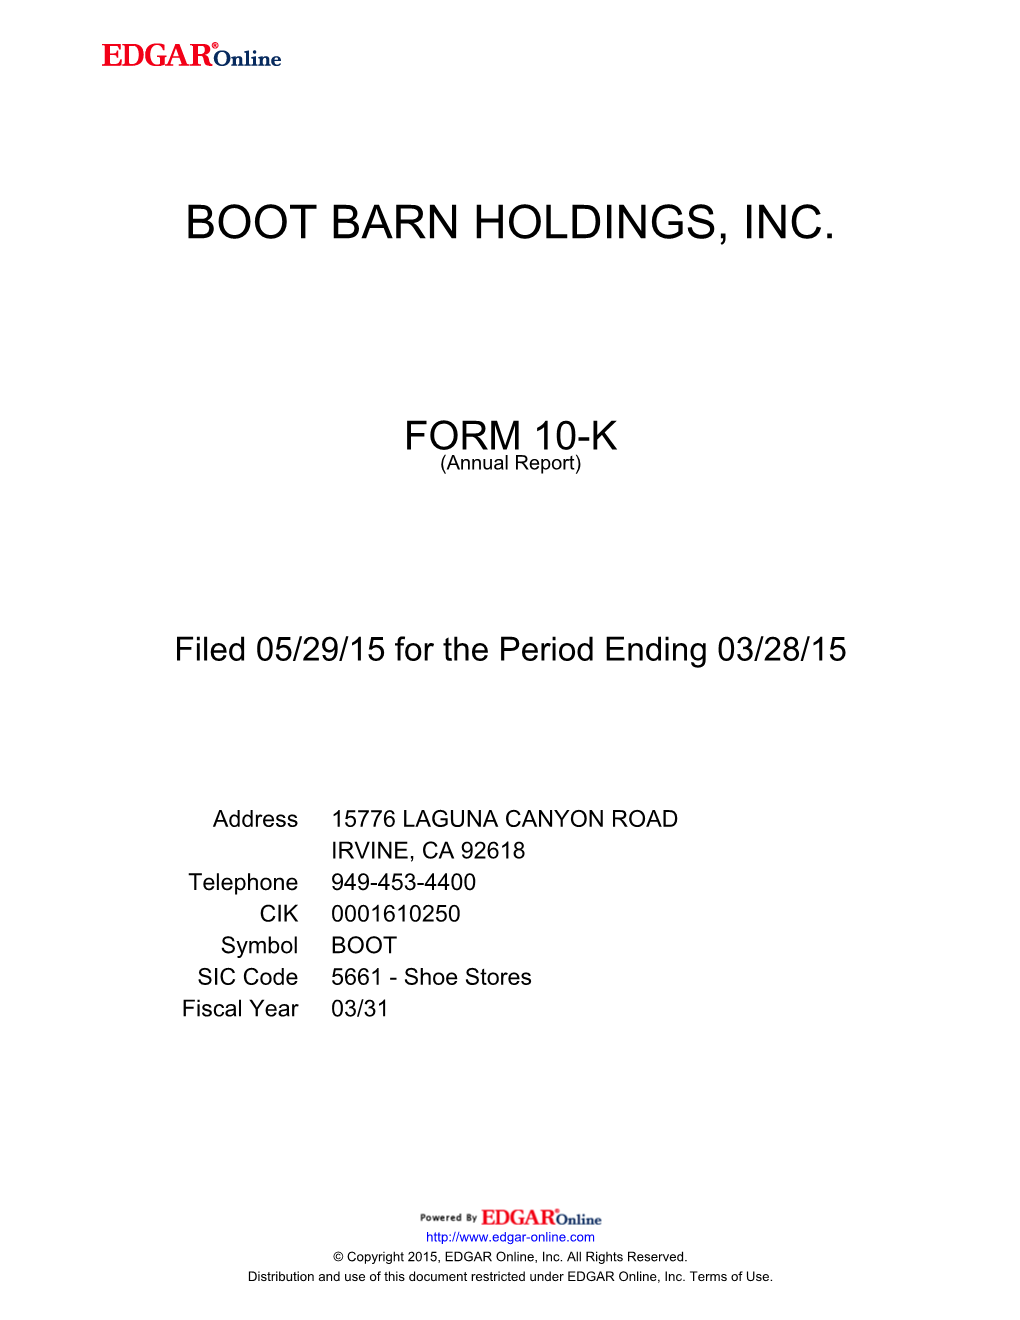 Boot Barn Holdings, Inc